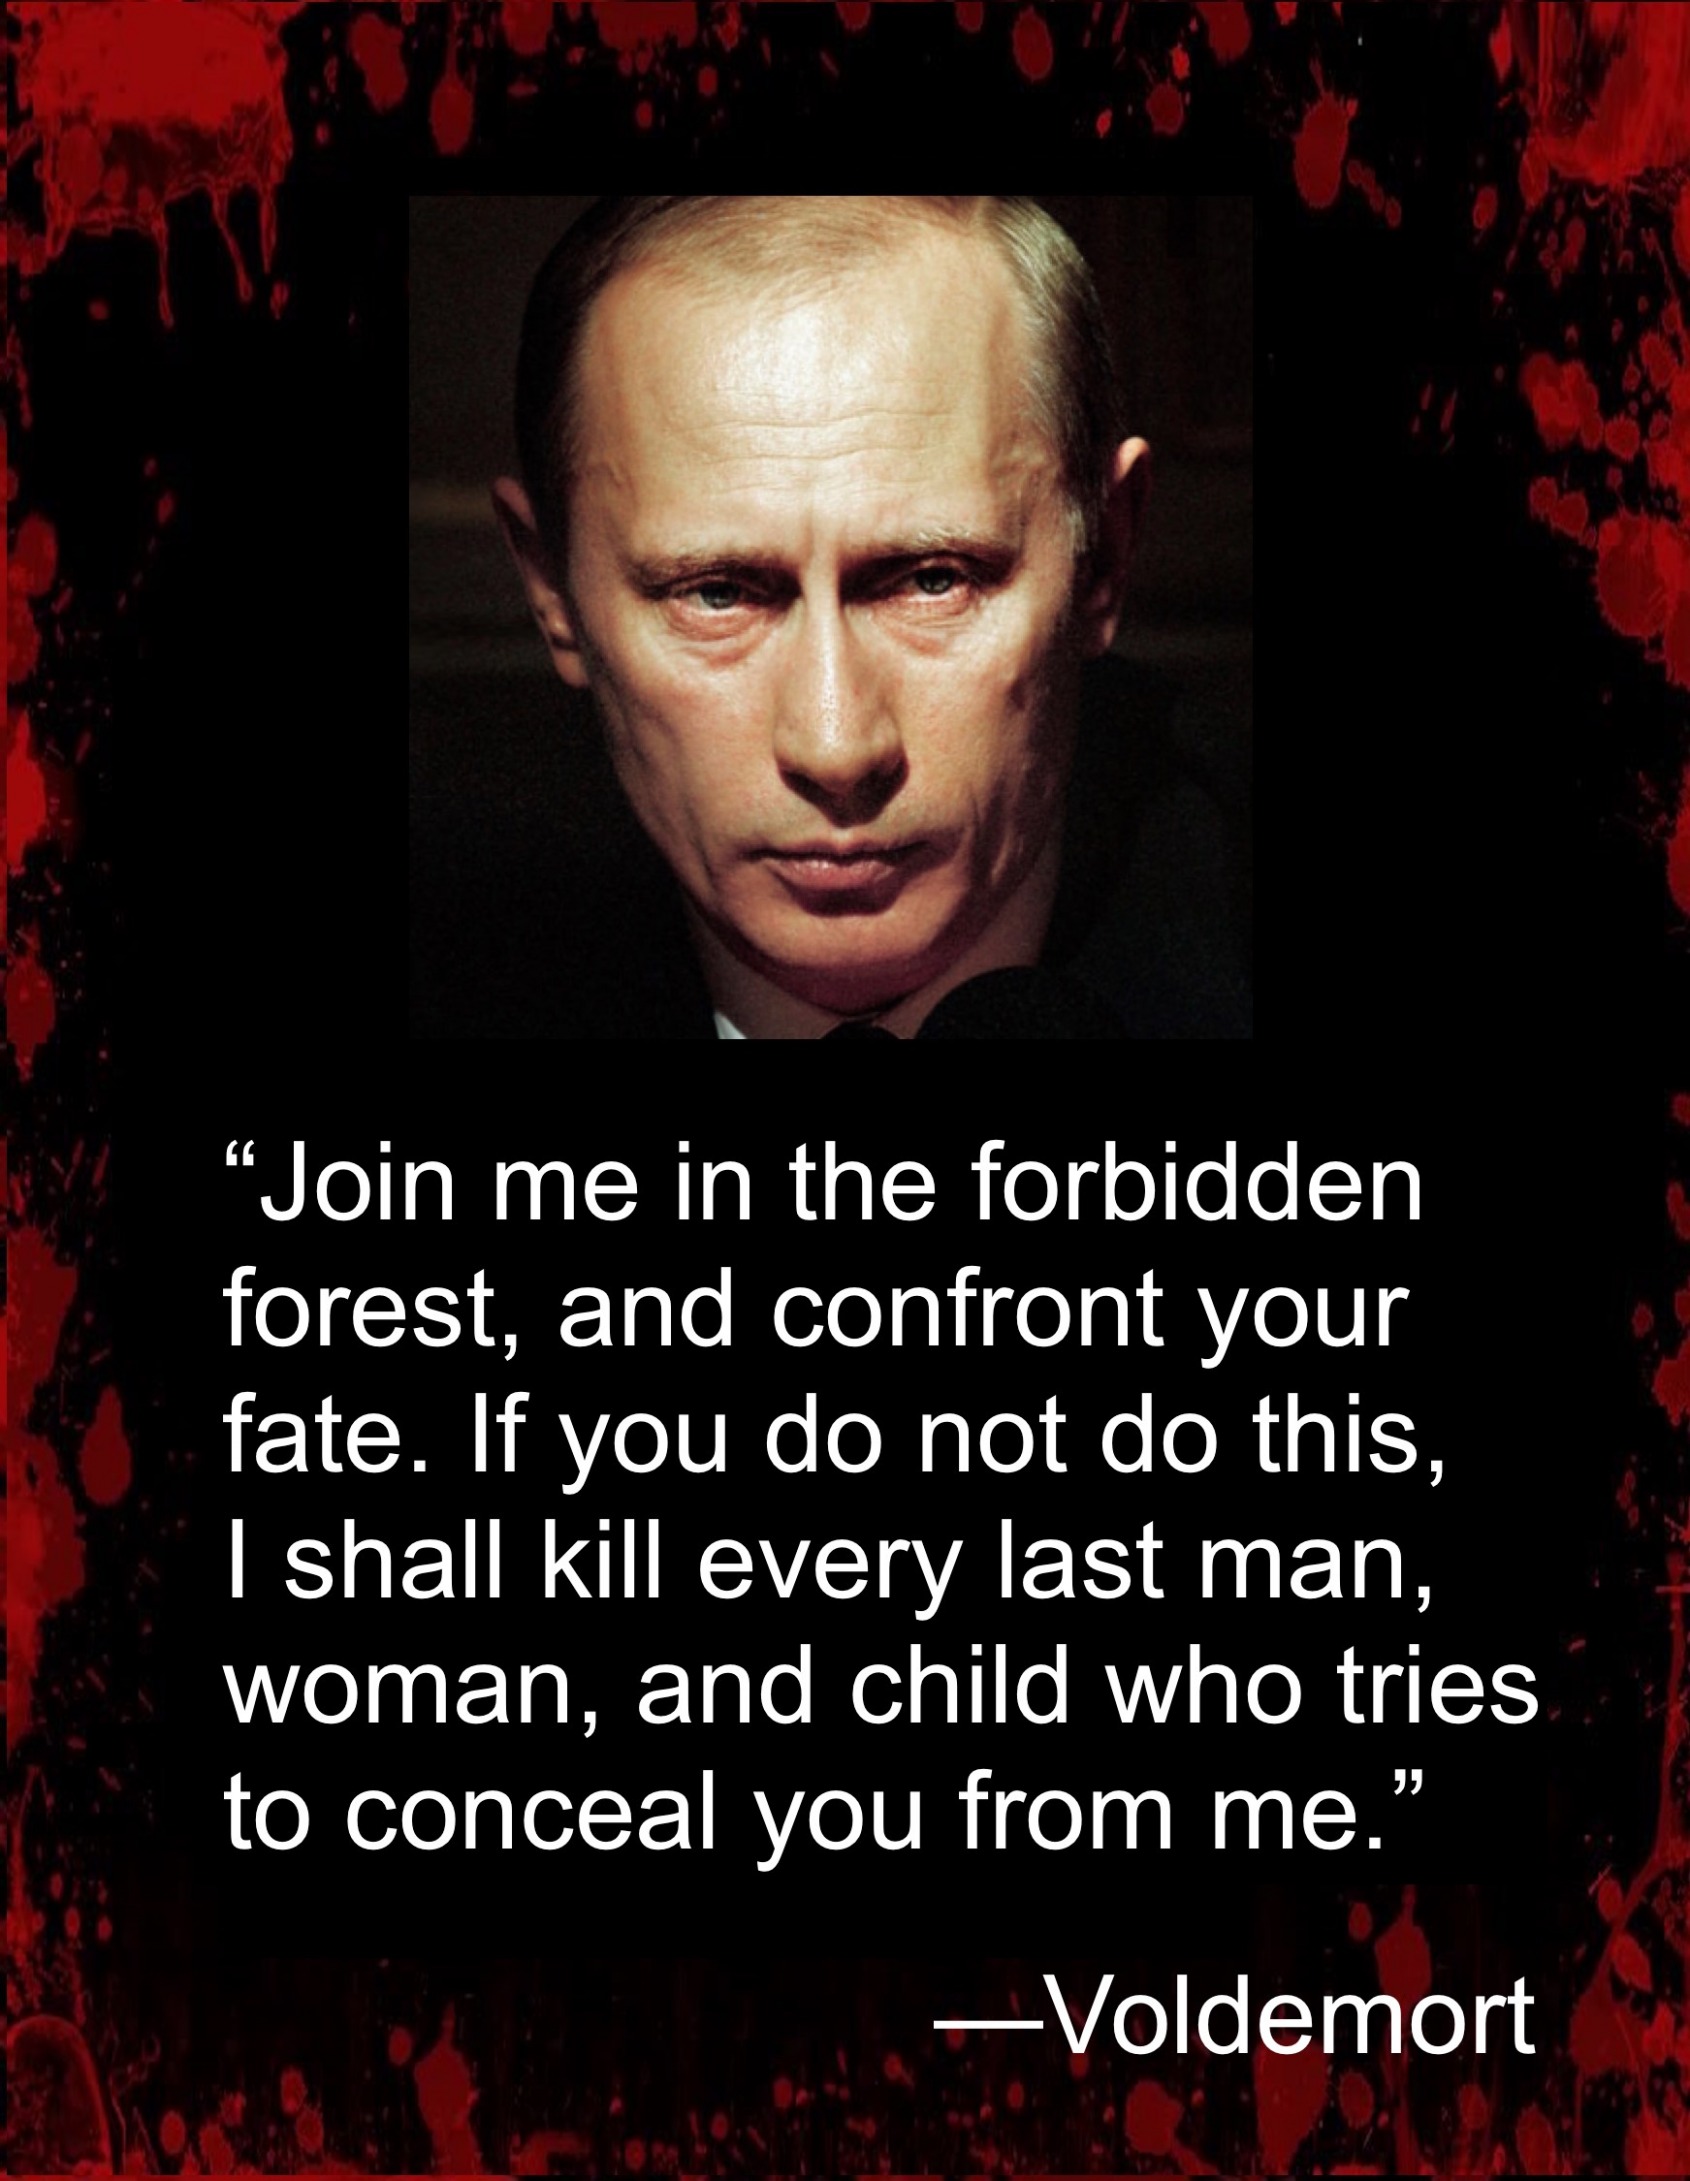 Putin Voldemort Quote meme Blank Meme Template